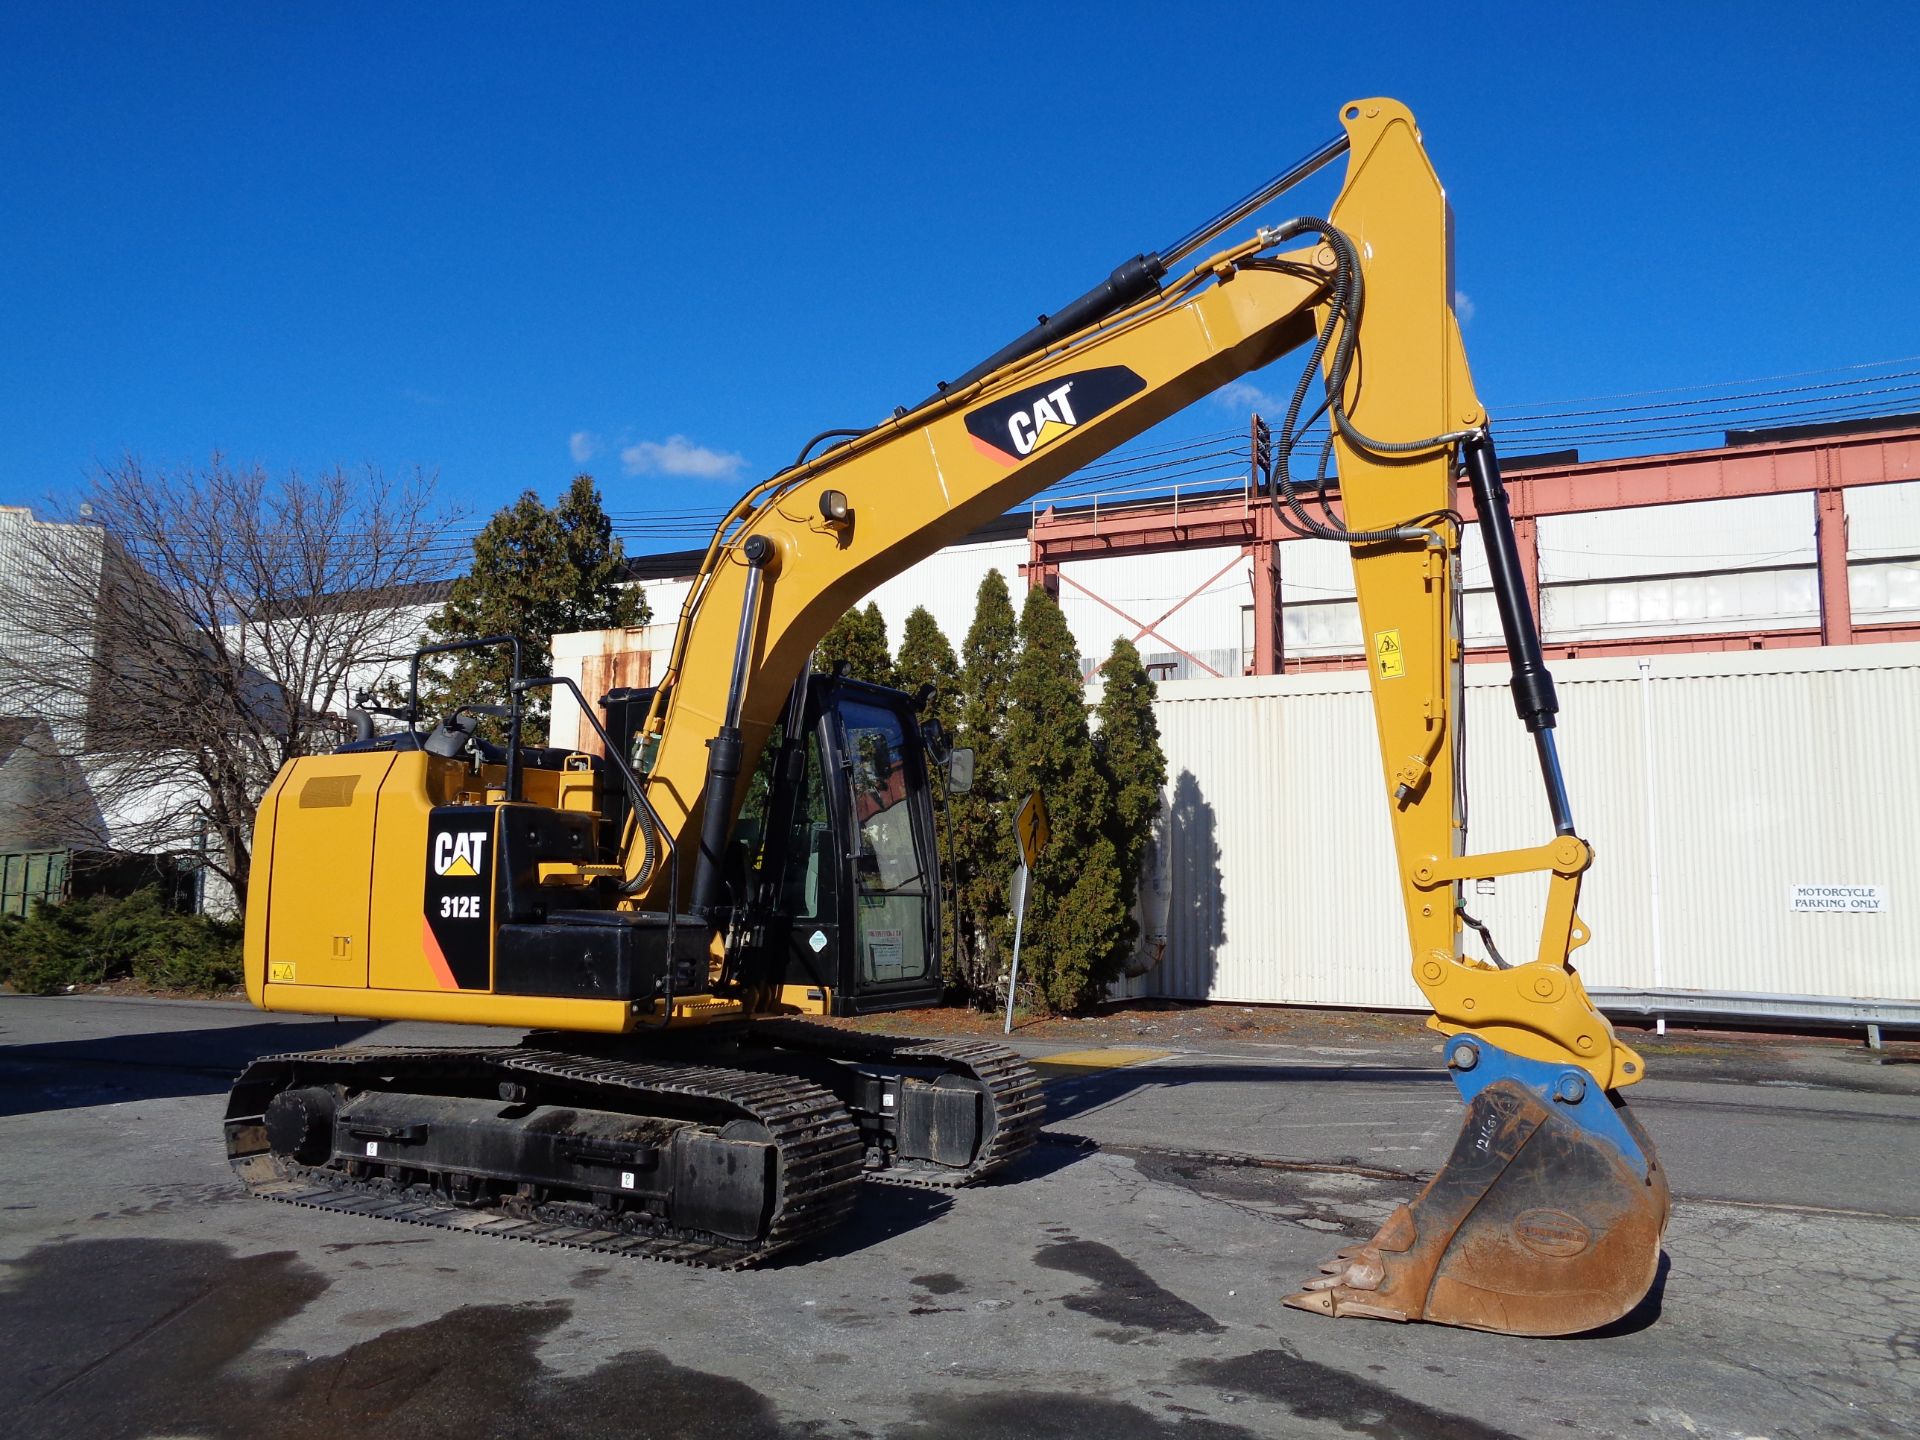 2015 Caterpillar 312E Hydraulic Excavator - Image 2 of 15